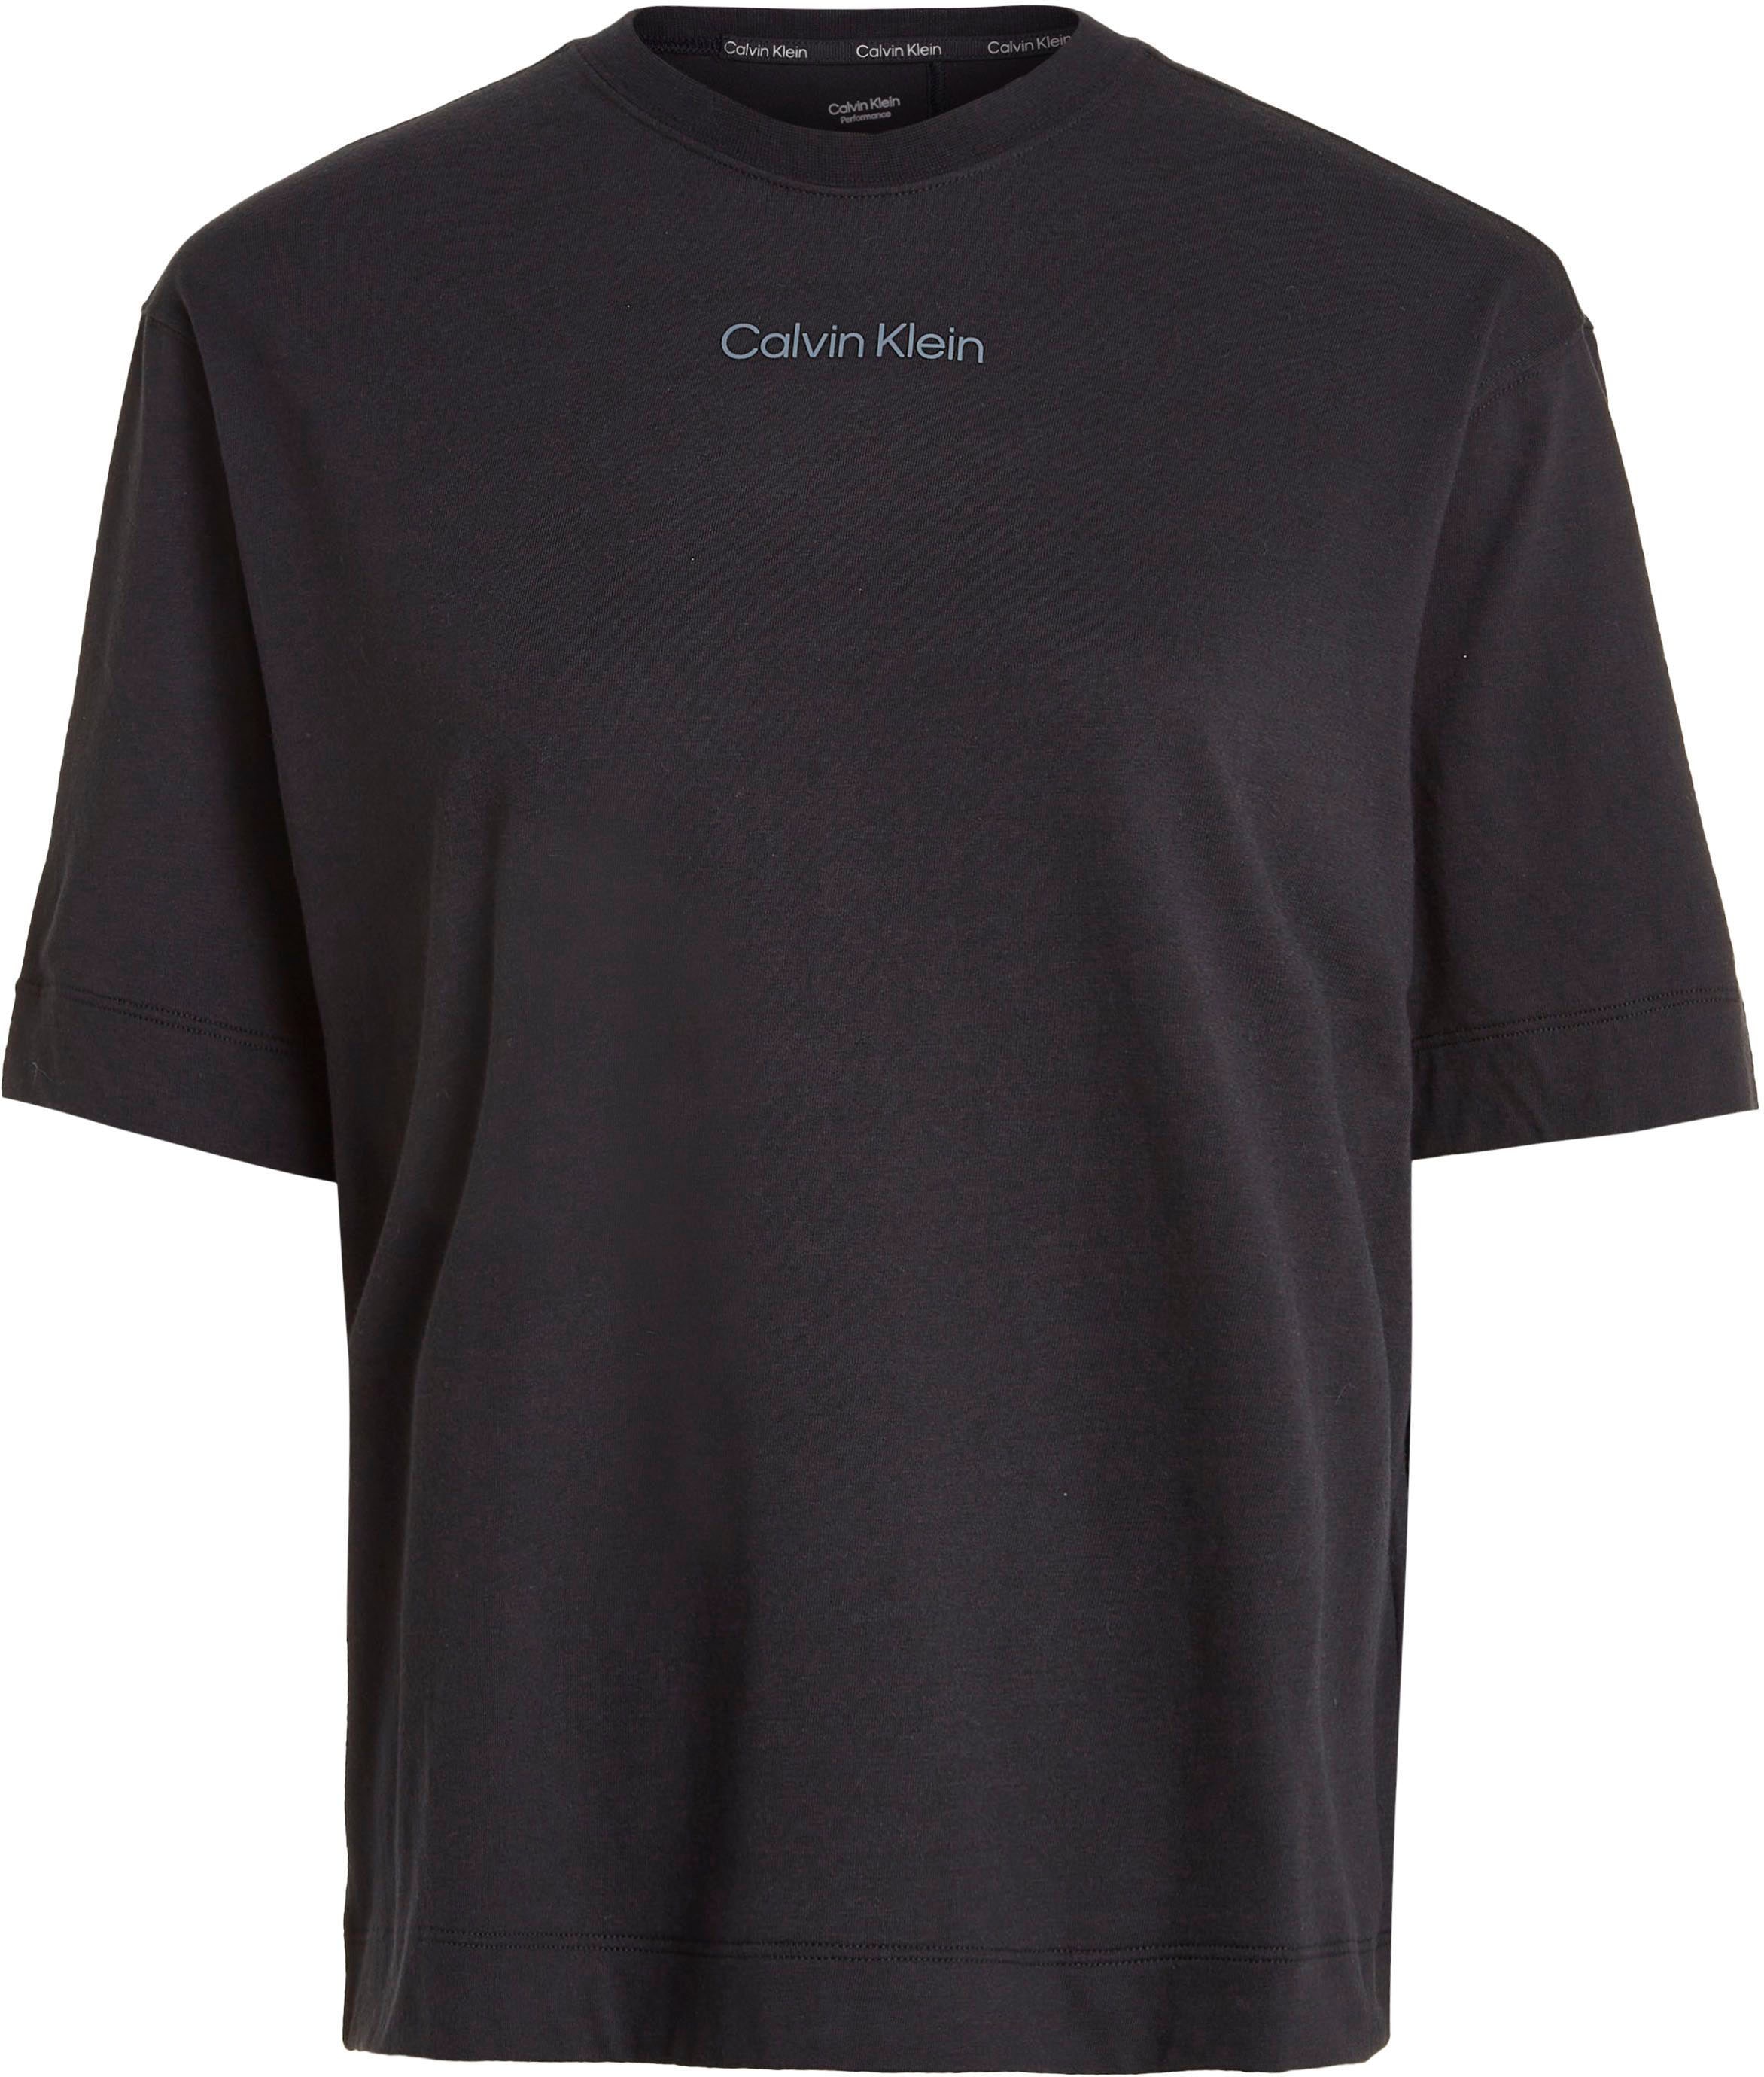 Sport Klein Schweiz Jelmoli-Versand shoppen bei T-Shirt Calvin online